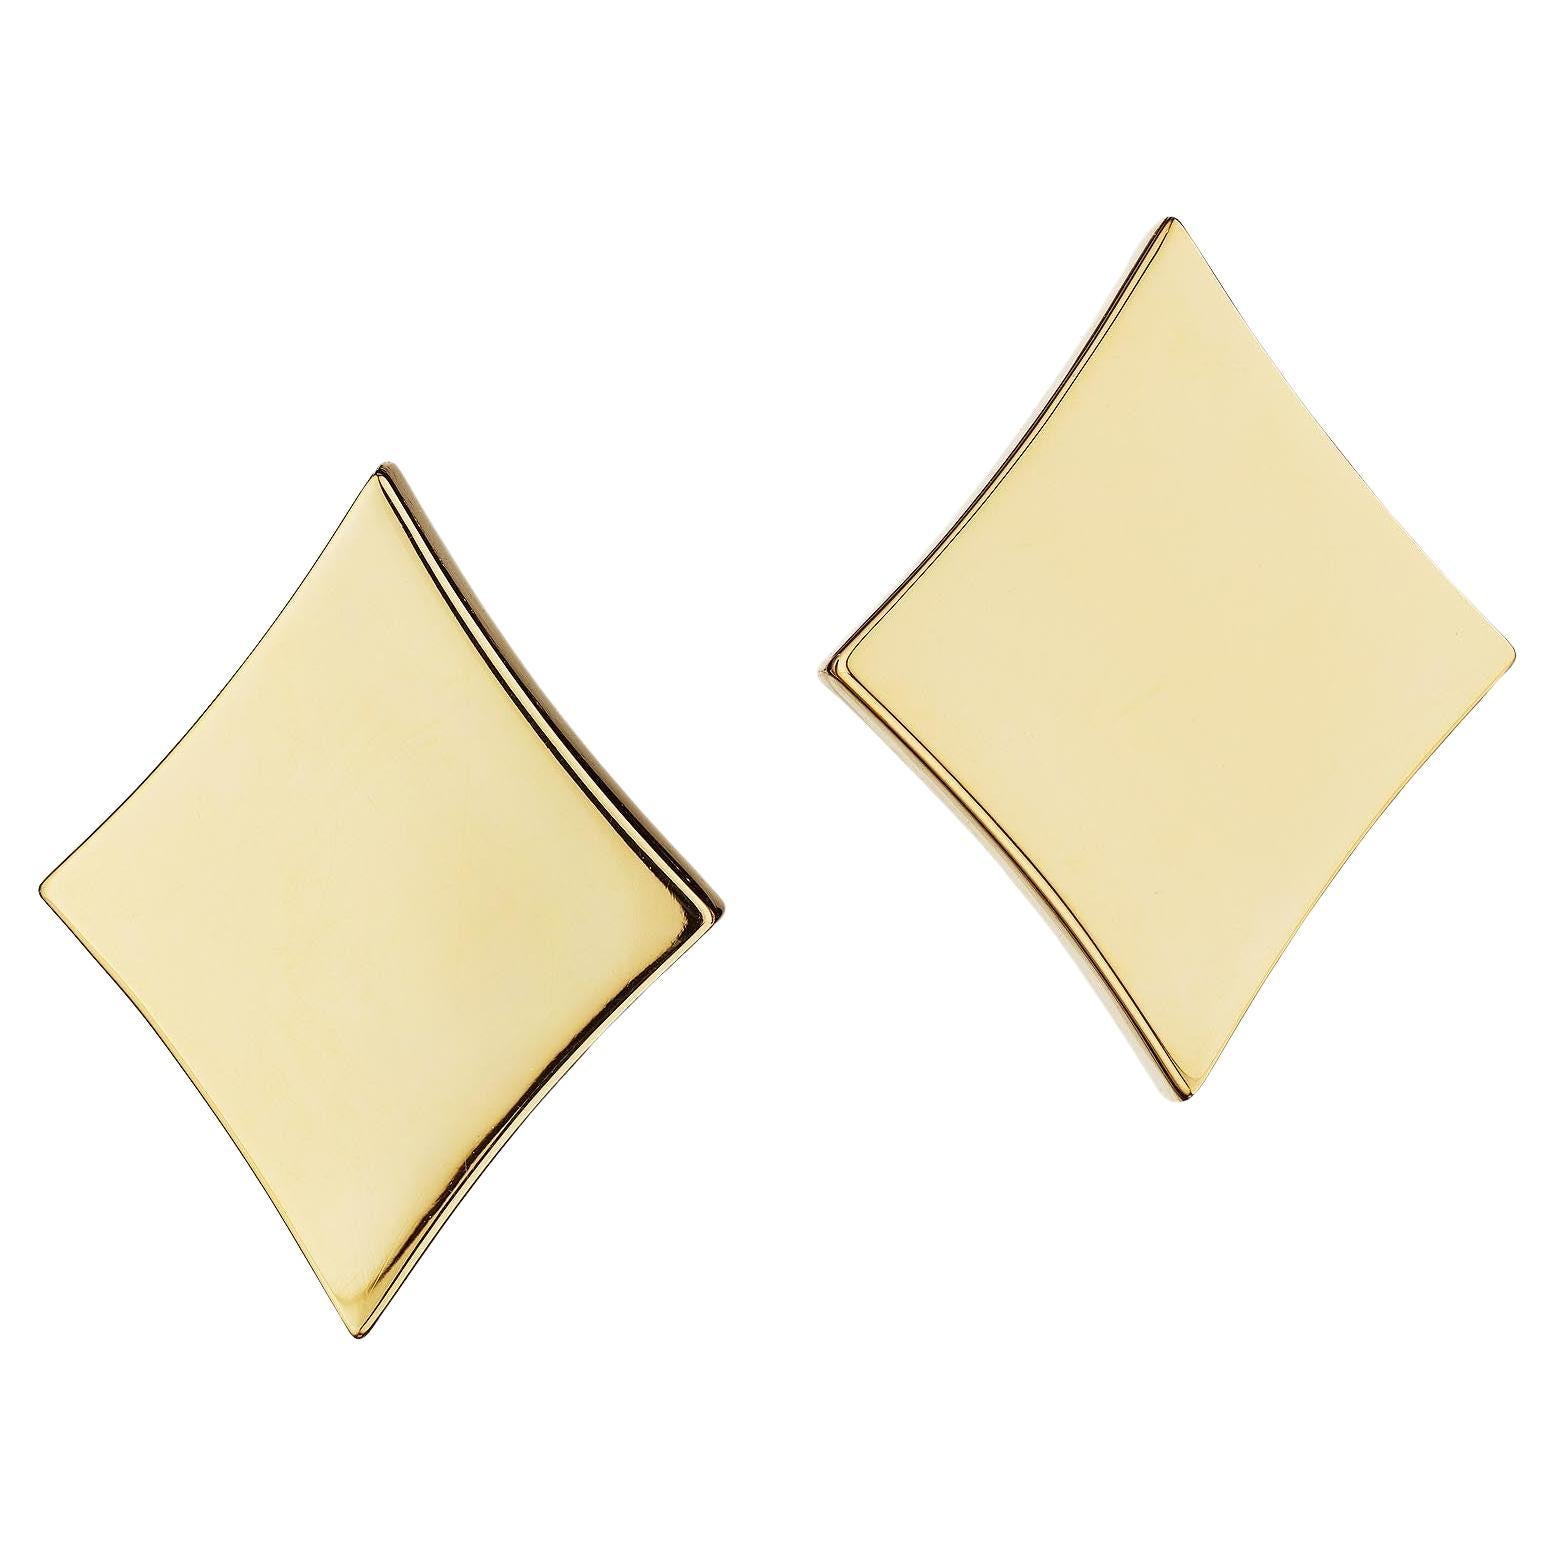 Aldo Cipullo Cartier Modernist Diamond Shaped Gold Clip Earrings